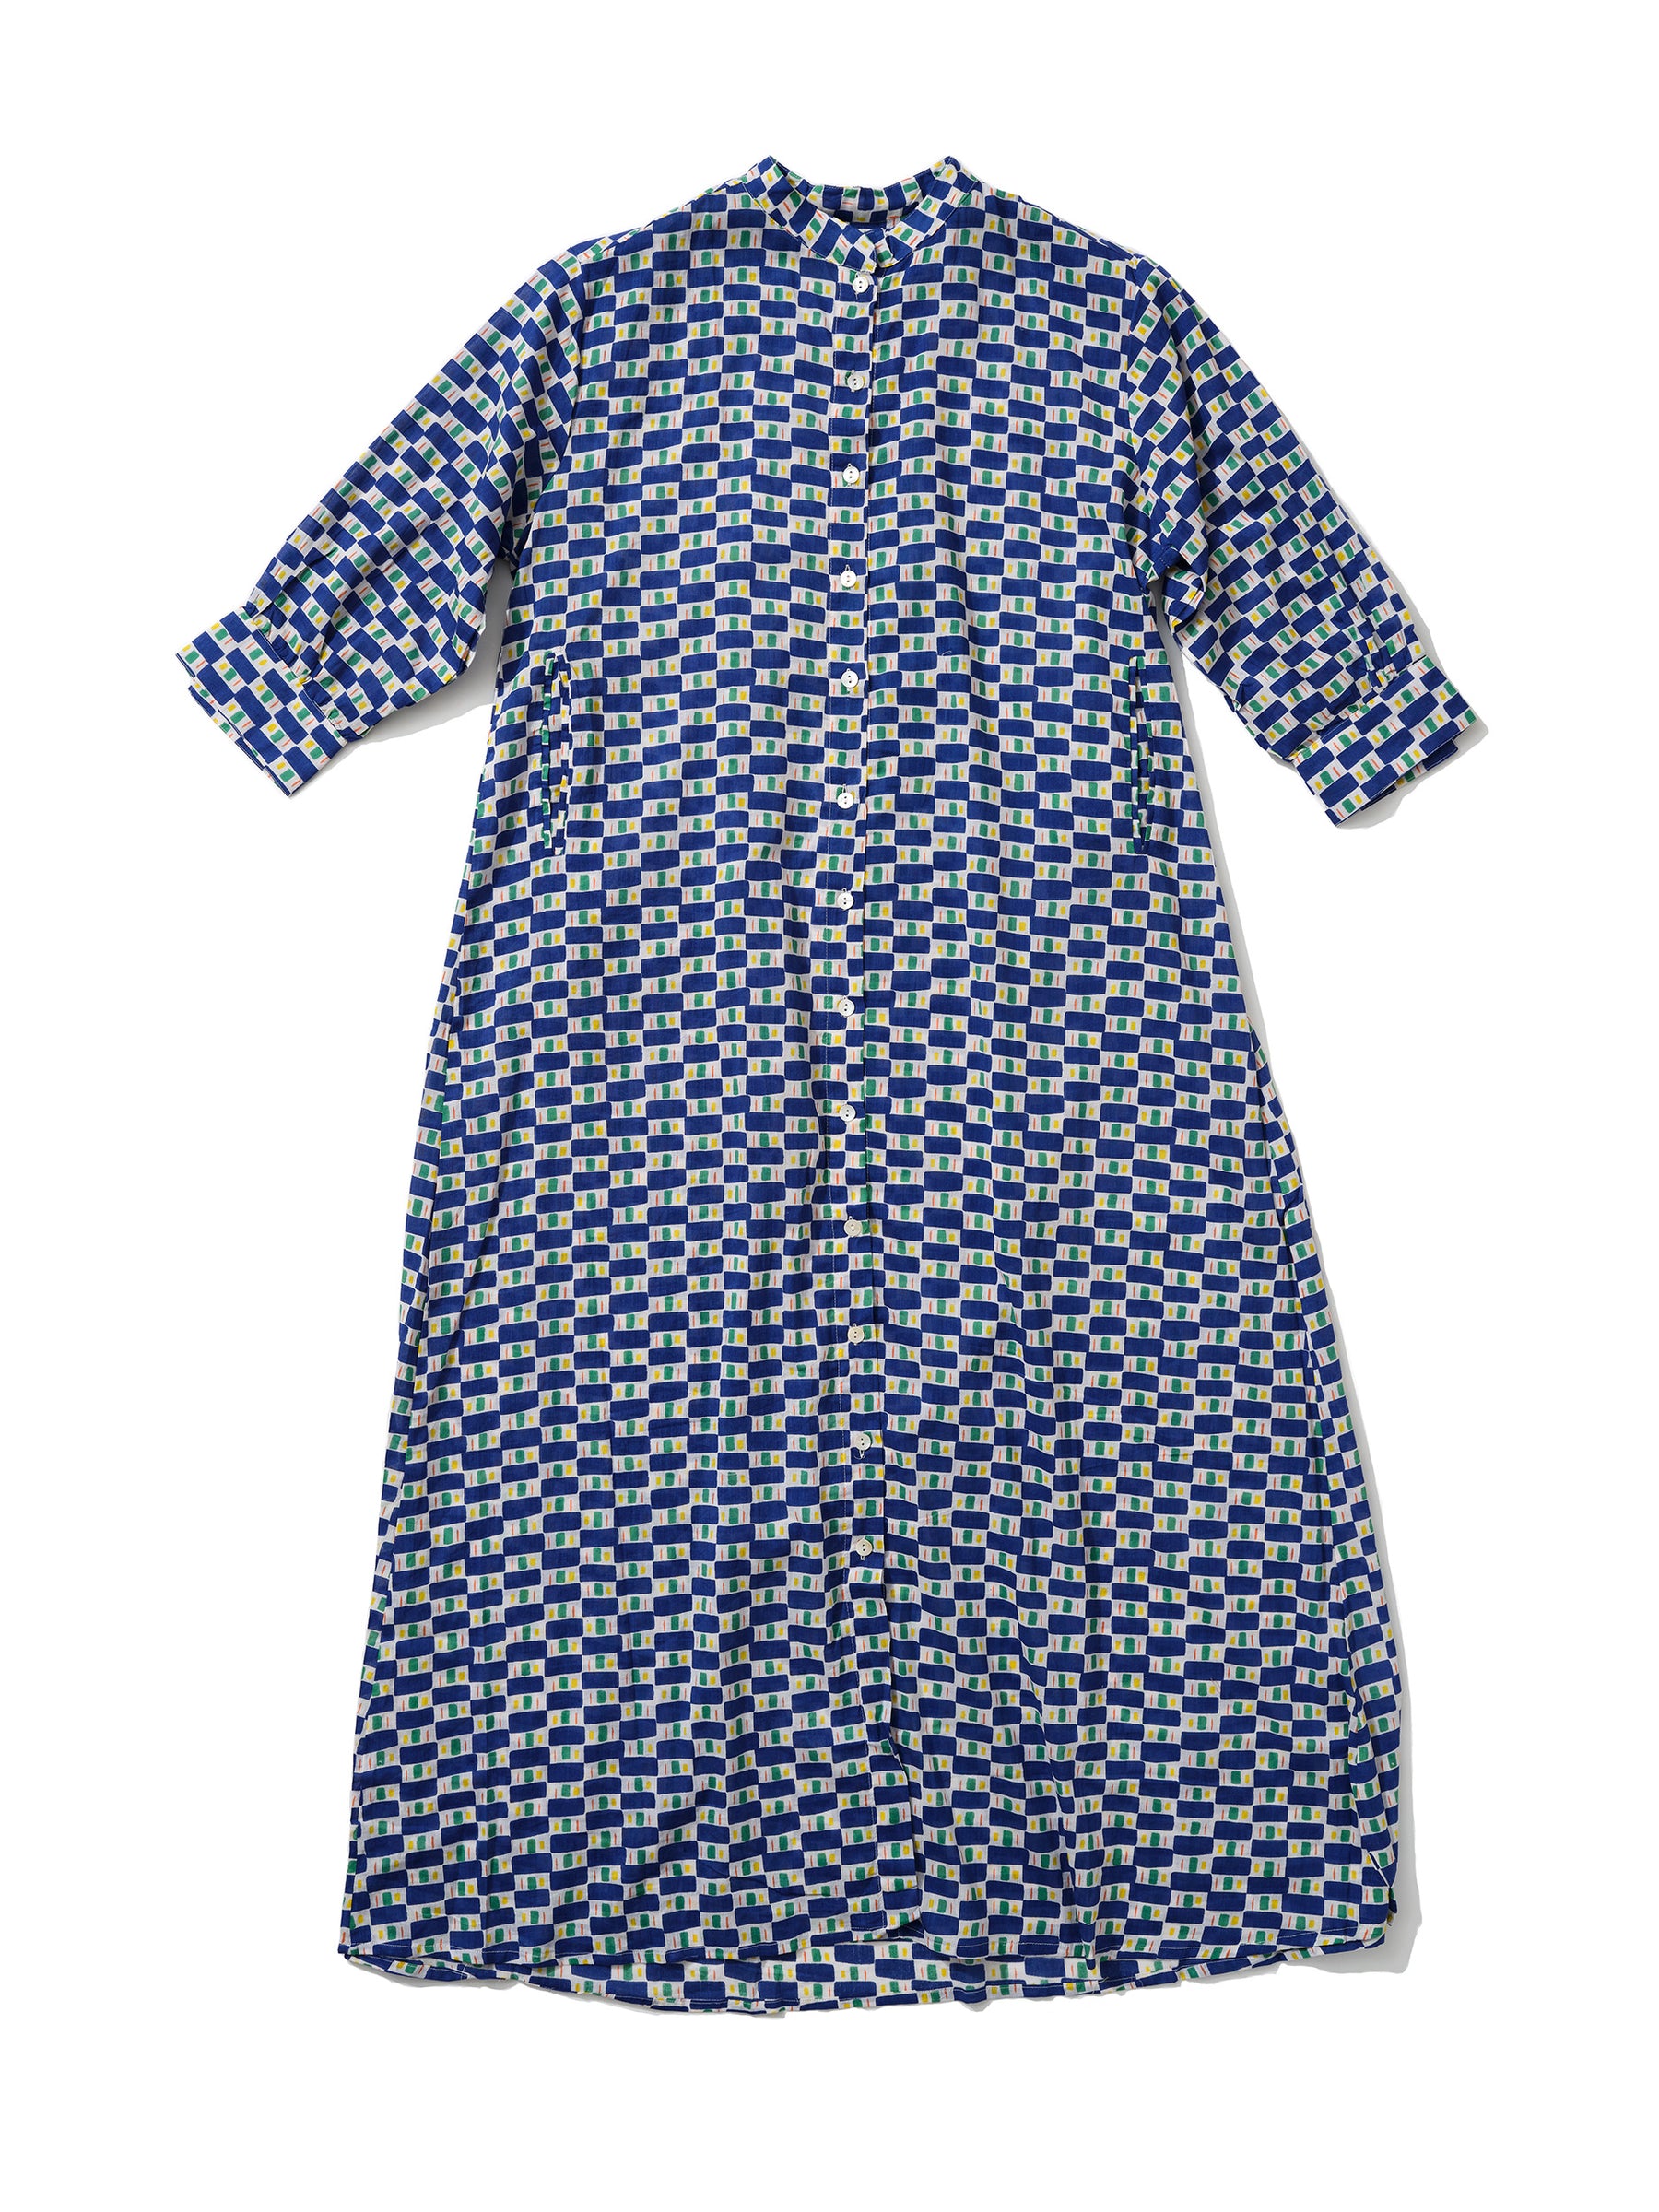 Beachy Gown in 'Blue Bridge' Print